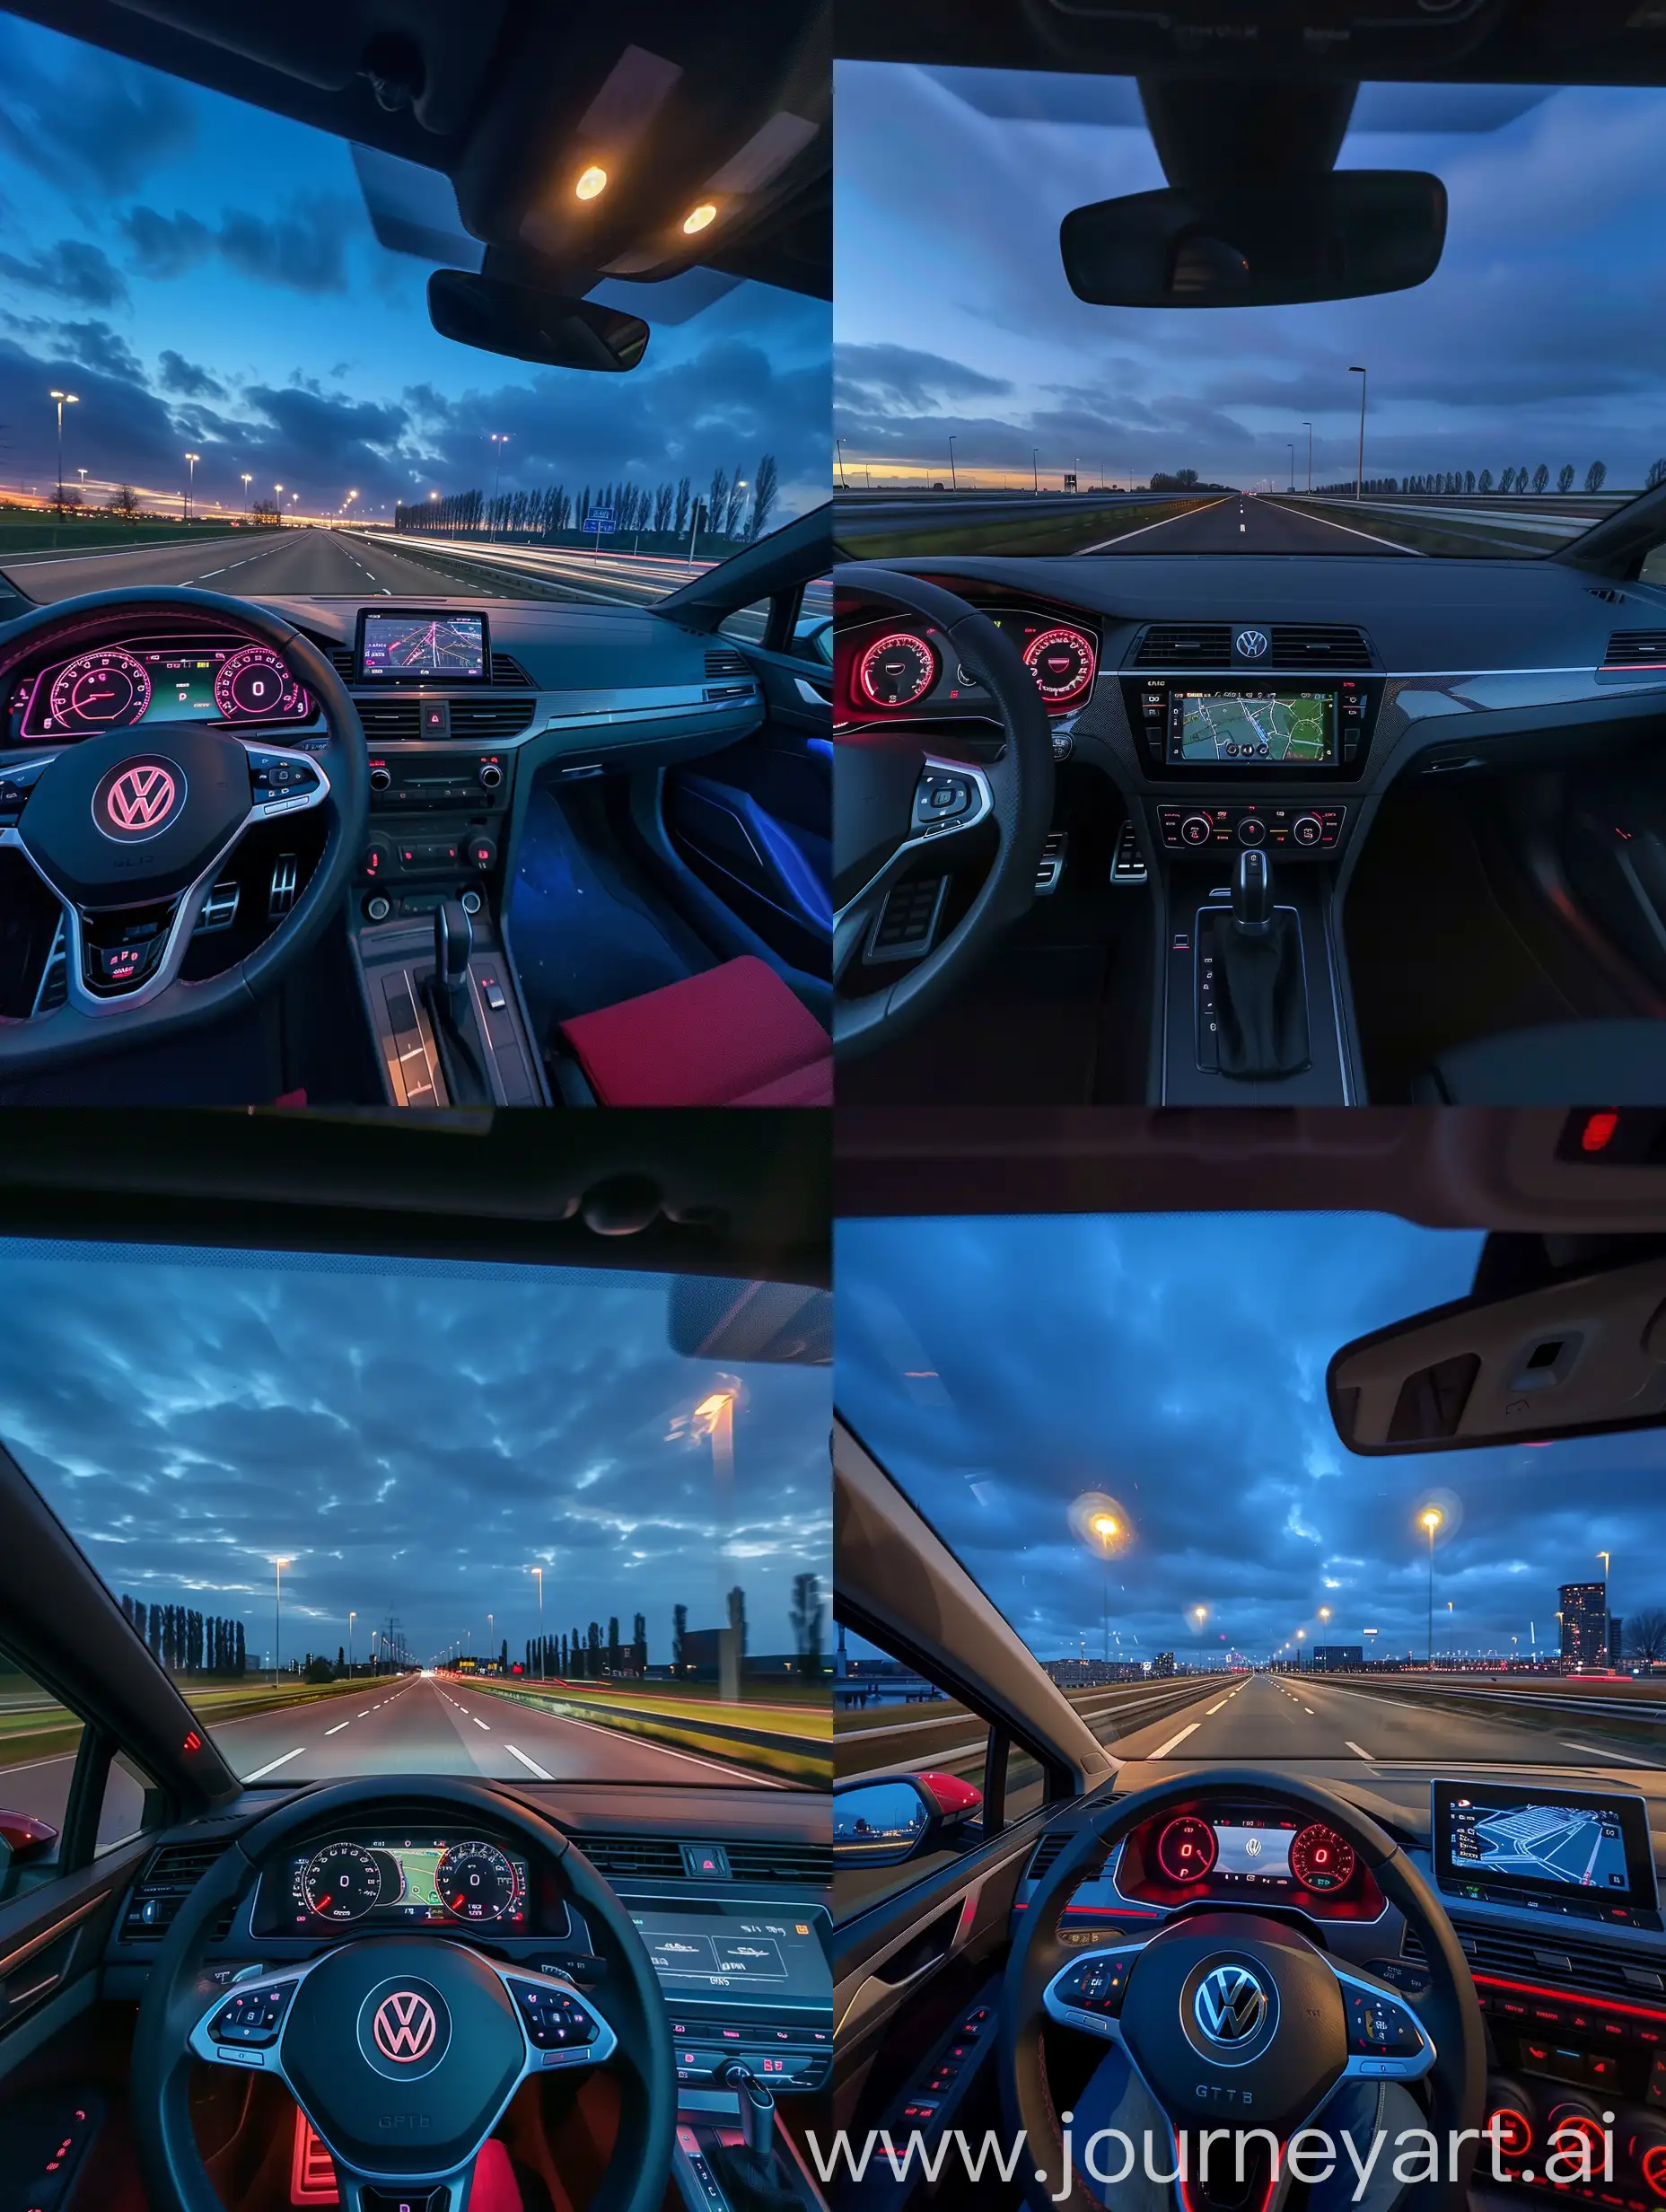 Morning-Drive-in-a-Volkswagen-Golf-MK7-GTI-Blue-Hour-POV-Snapshot